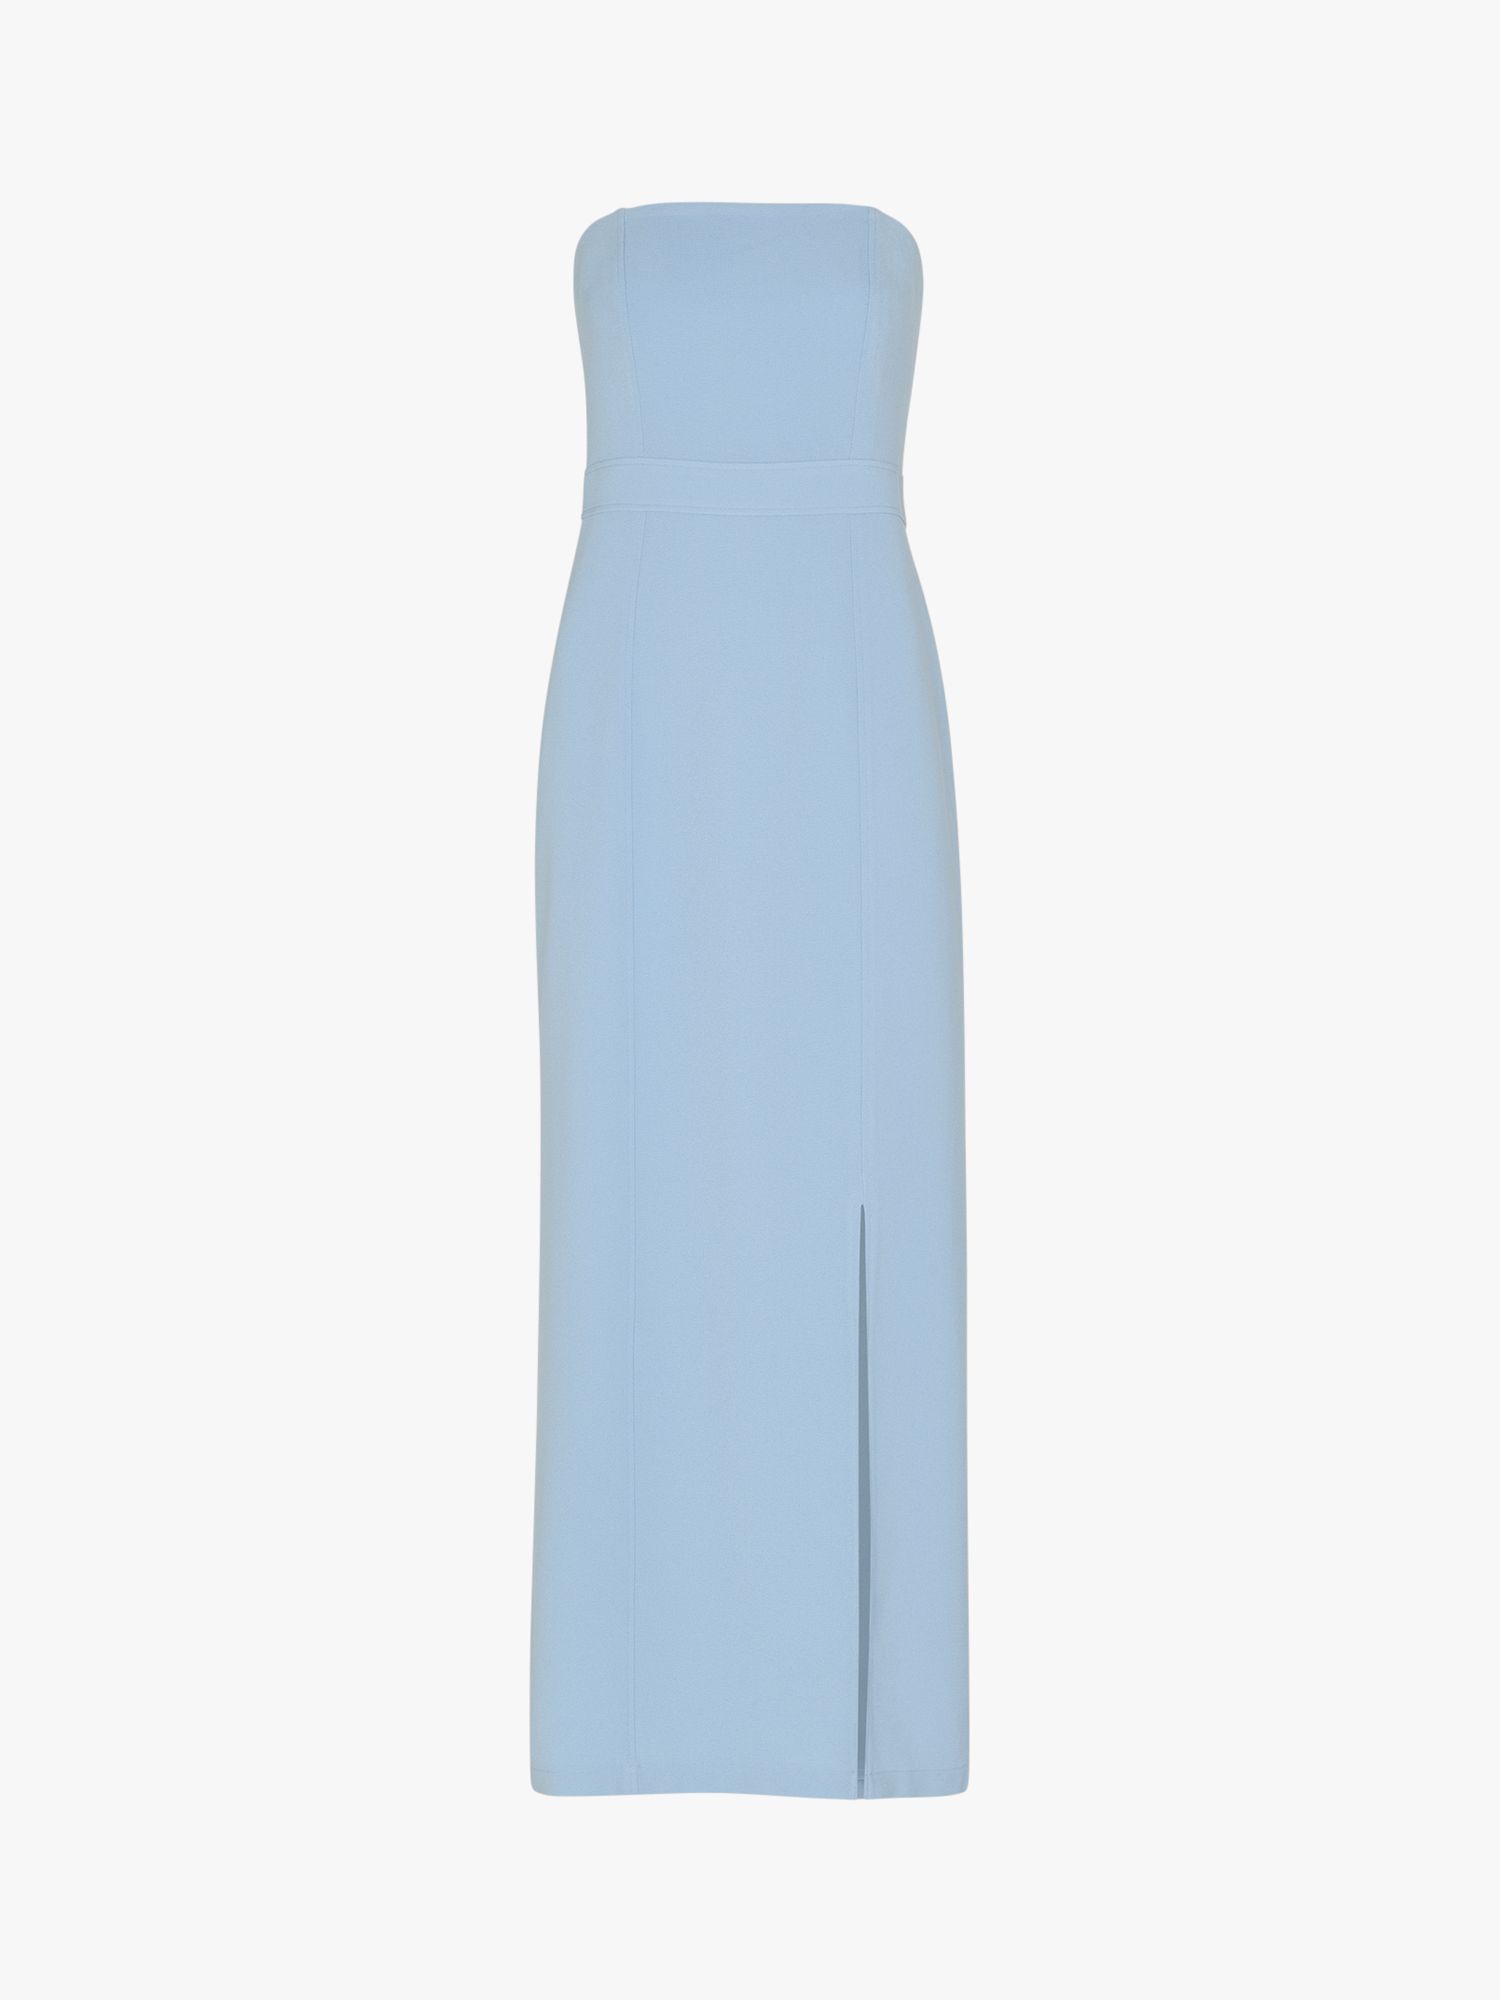 Whistles Gemma Strapless Maxi Dress, Pale Blue at John Lewis & Partners